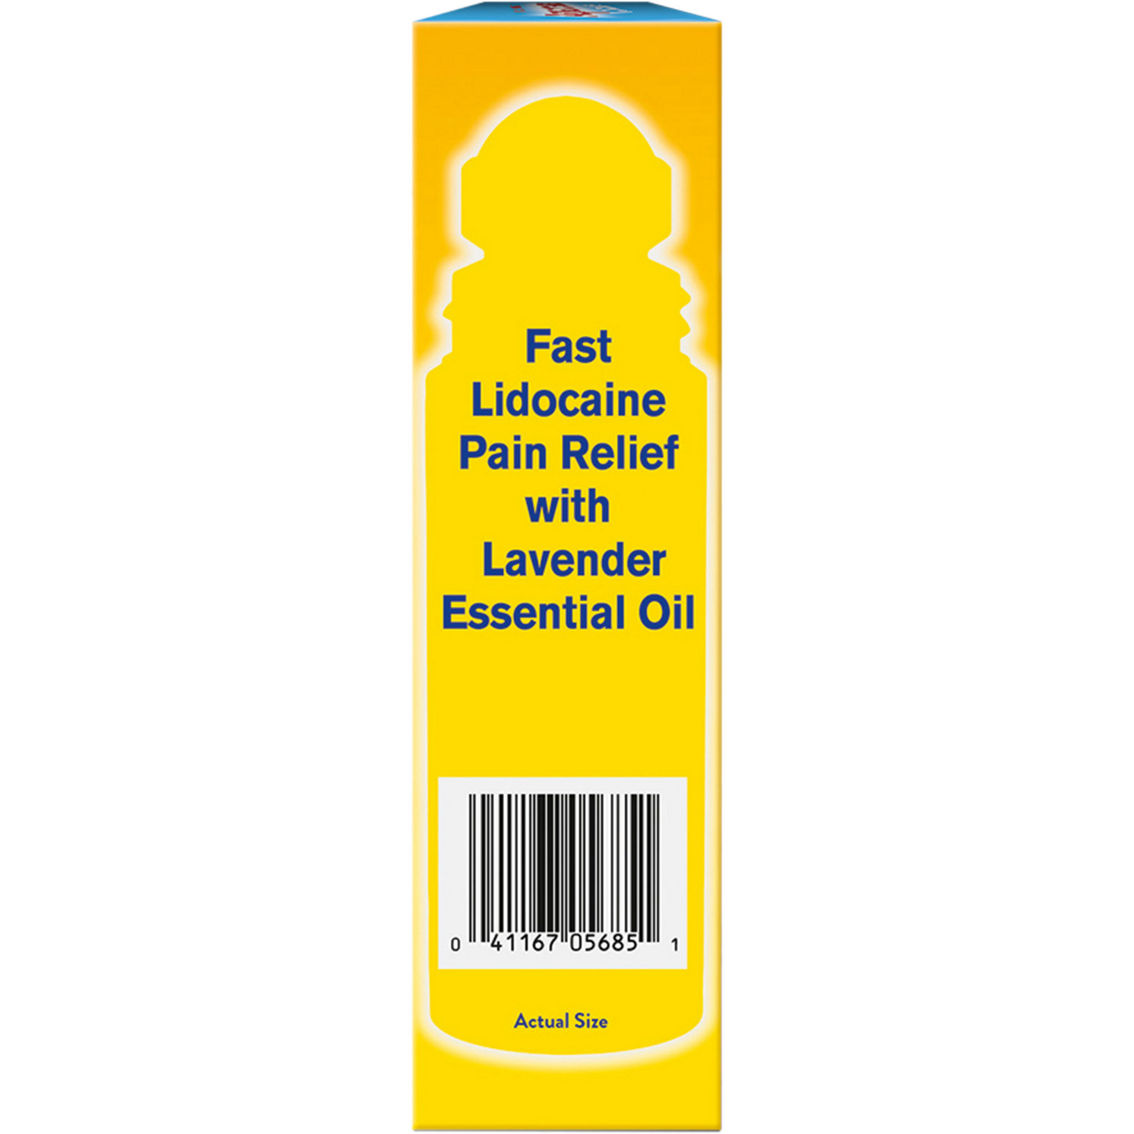 Aspercreme with Lidocaine No Mess Applicator and Lavender Essential Oils 2.5 oz. - Image 4 of 6